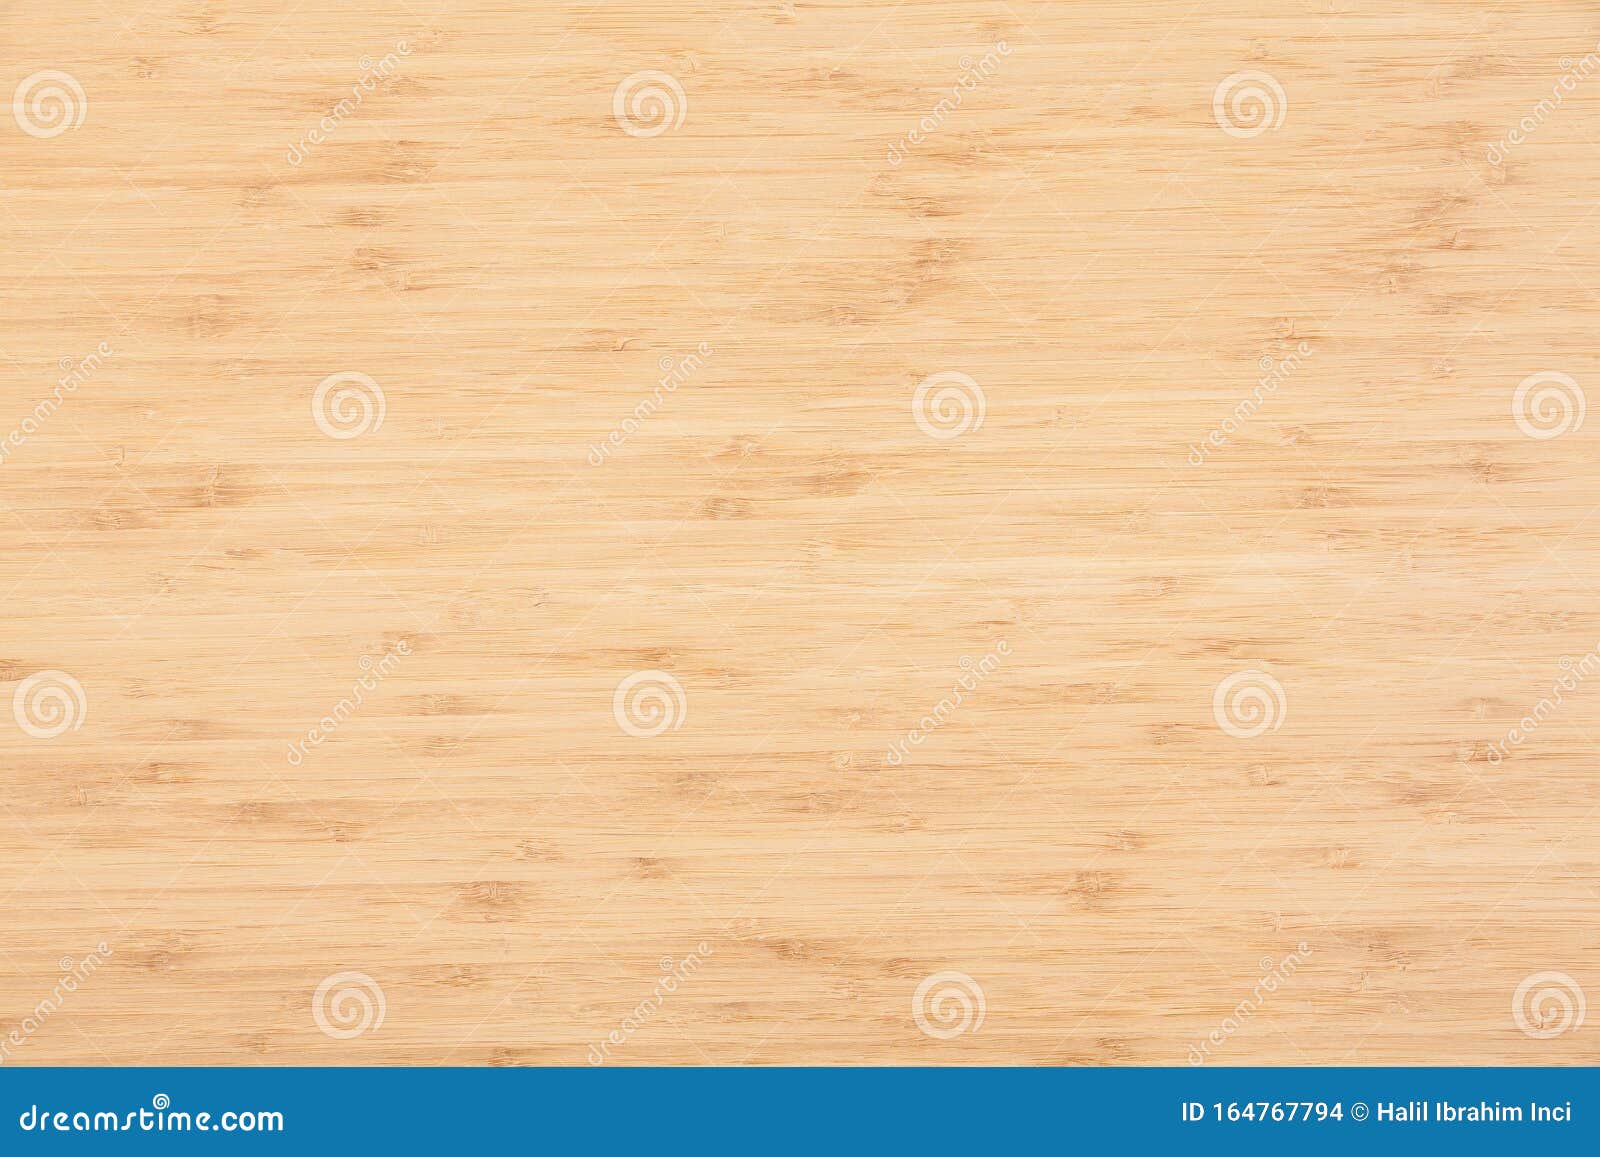 wood texture bamboo texture closer